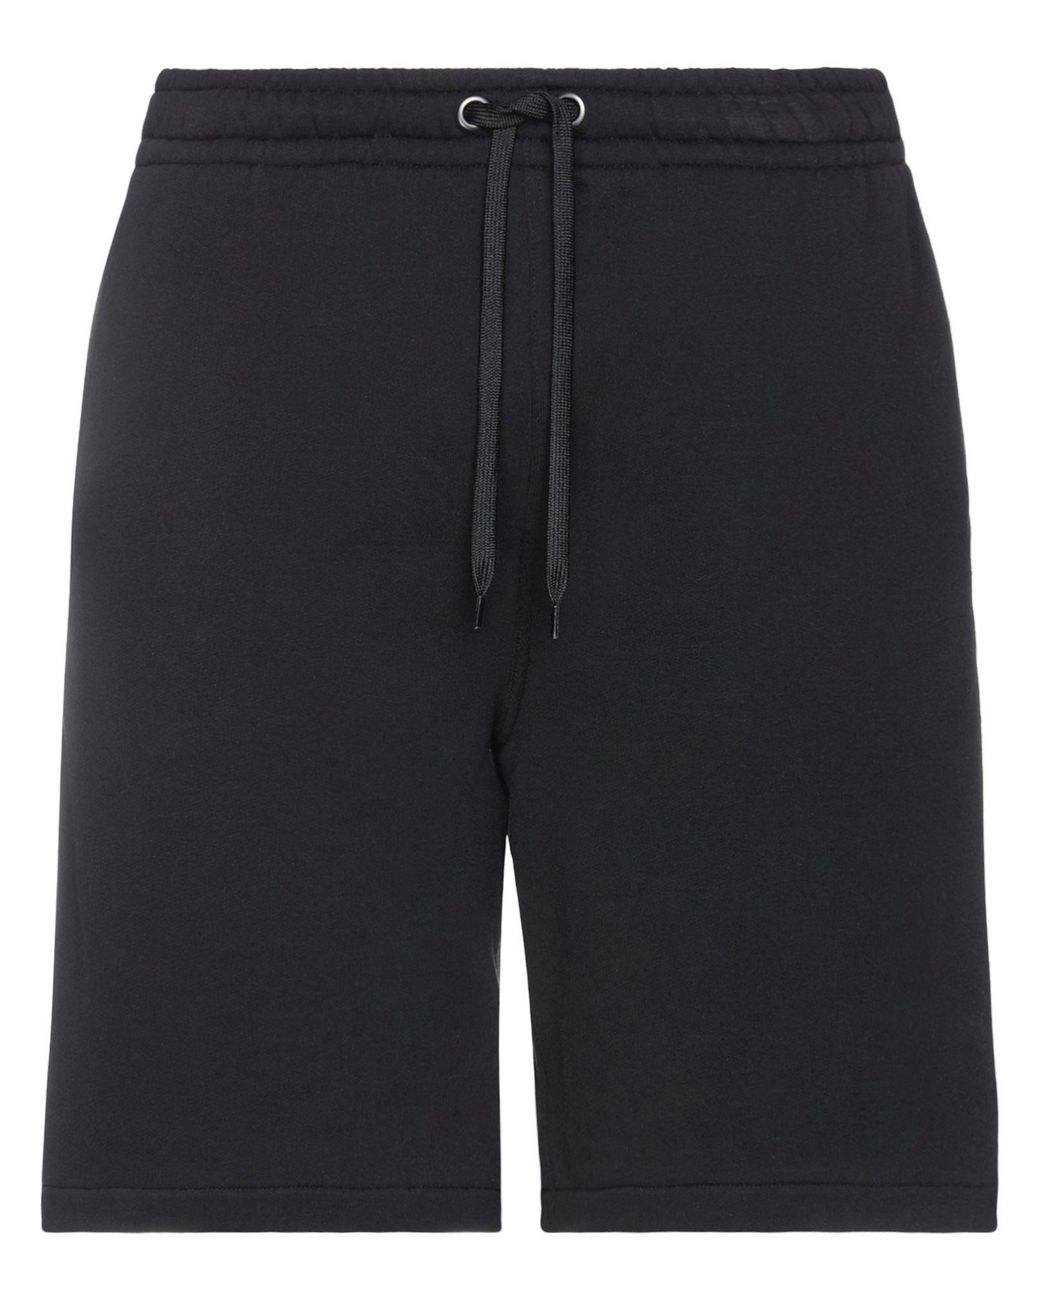 Burberry Bermuda Shorts in Black for Men - Lyst